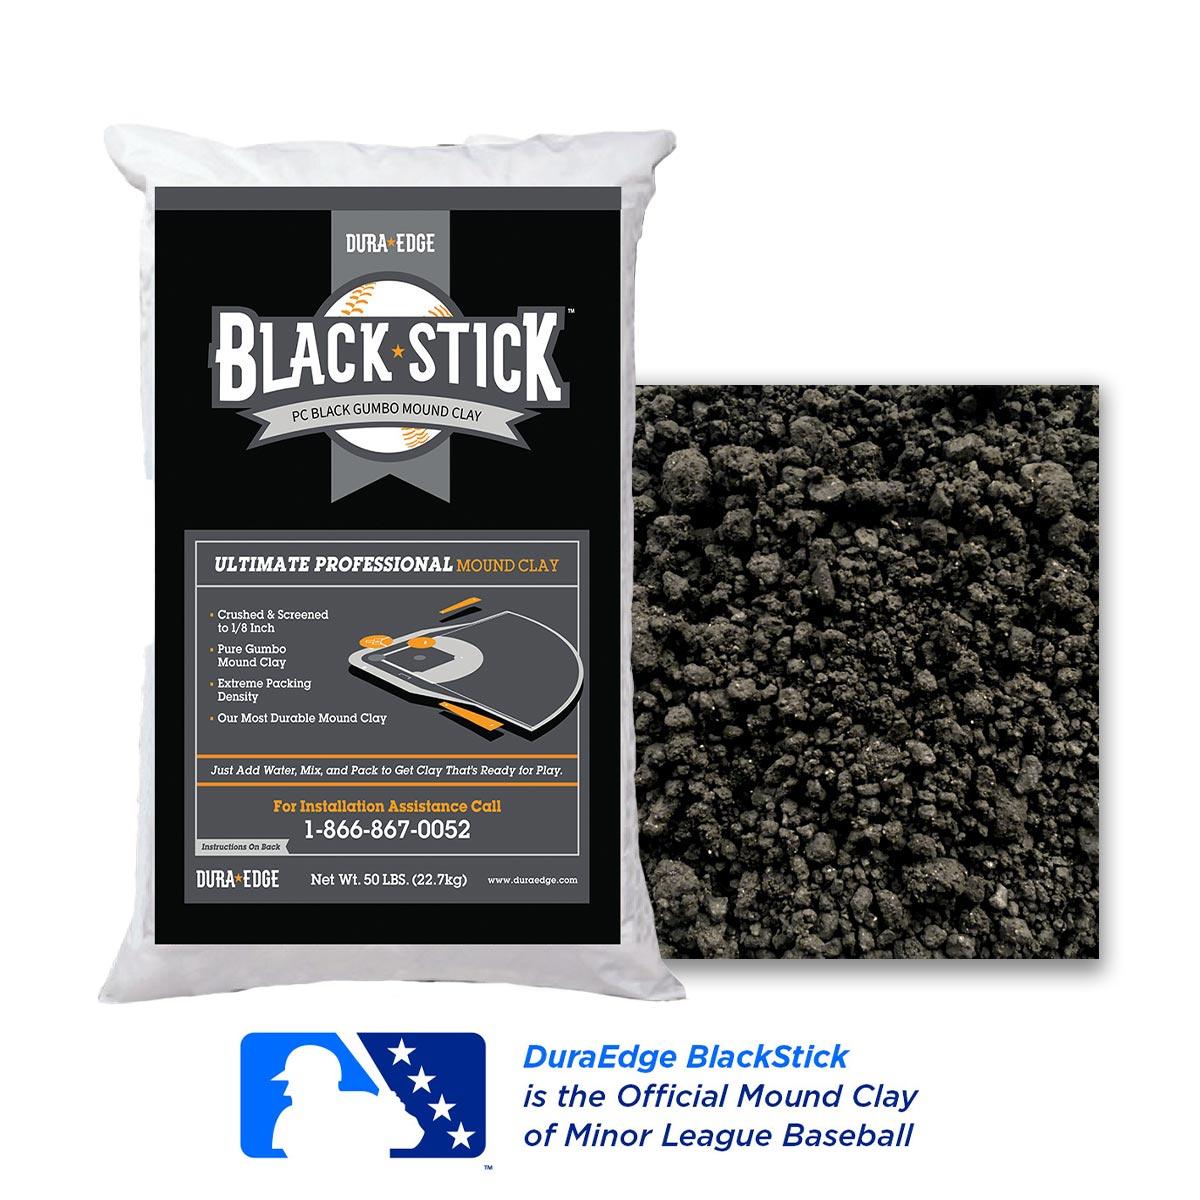 BlackStick Ultimate Professional Mound Clay